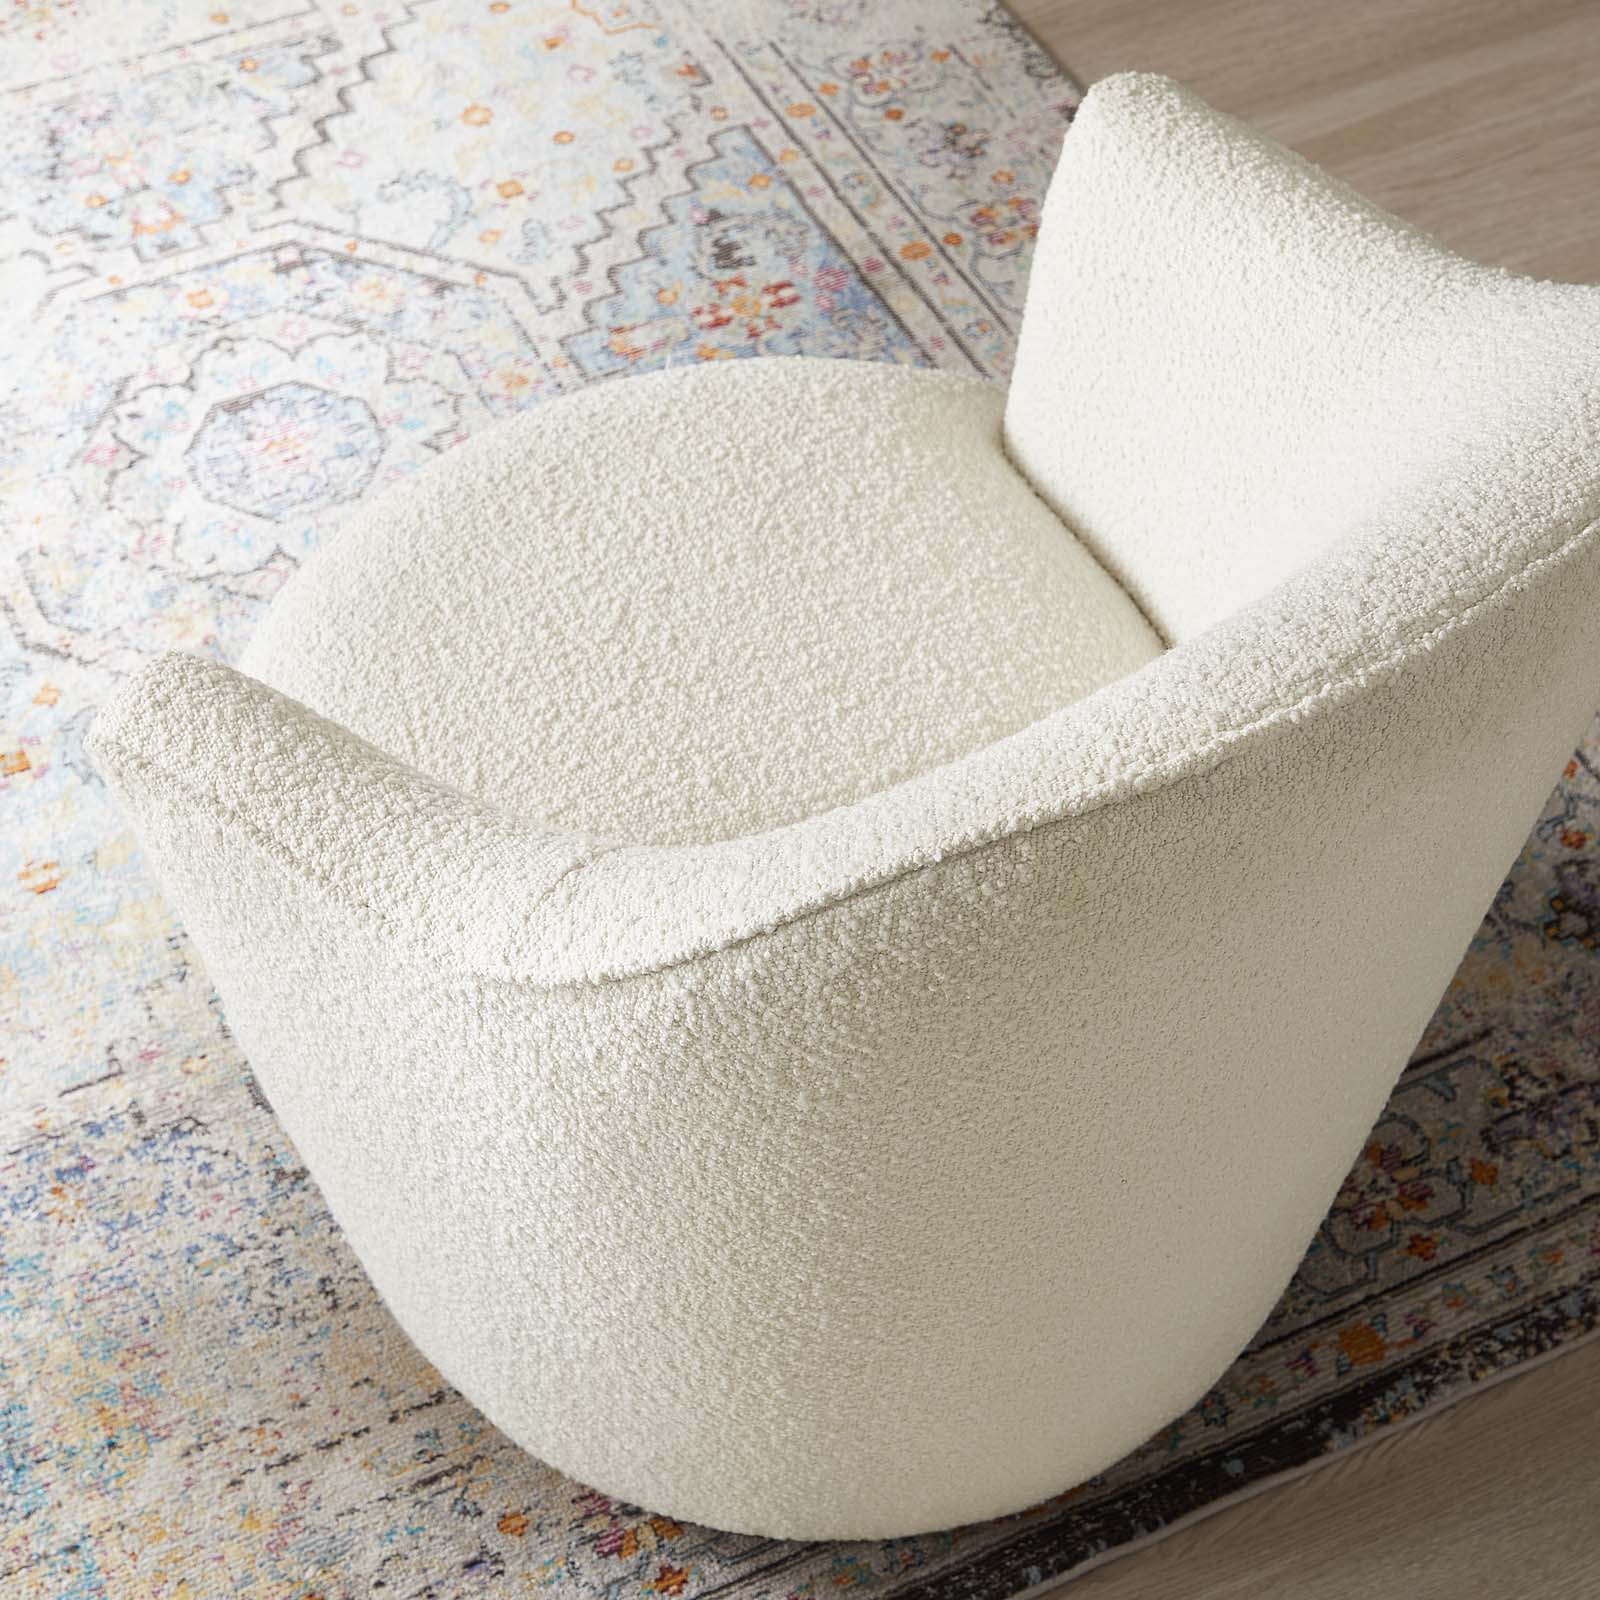 Nora Boucle Upholstered Swivel Chair - East Shore Modern Home Furnishings